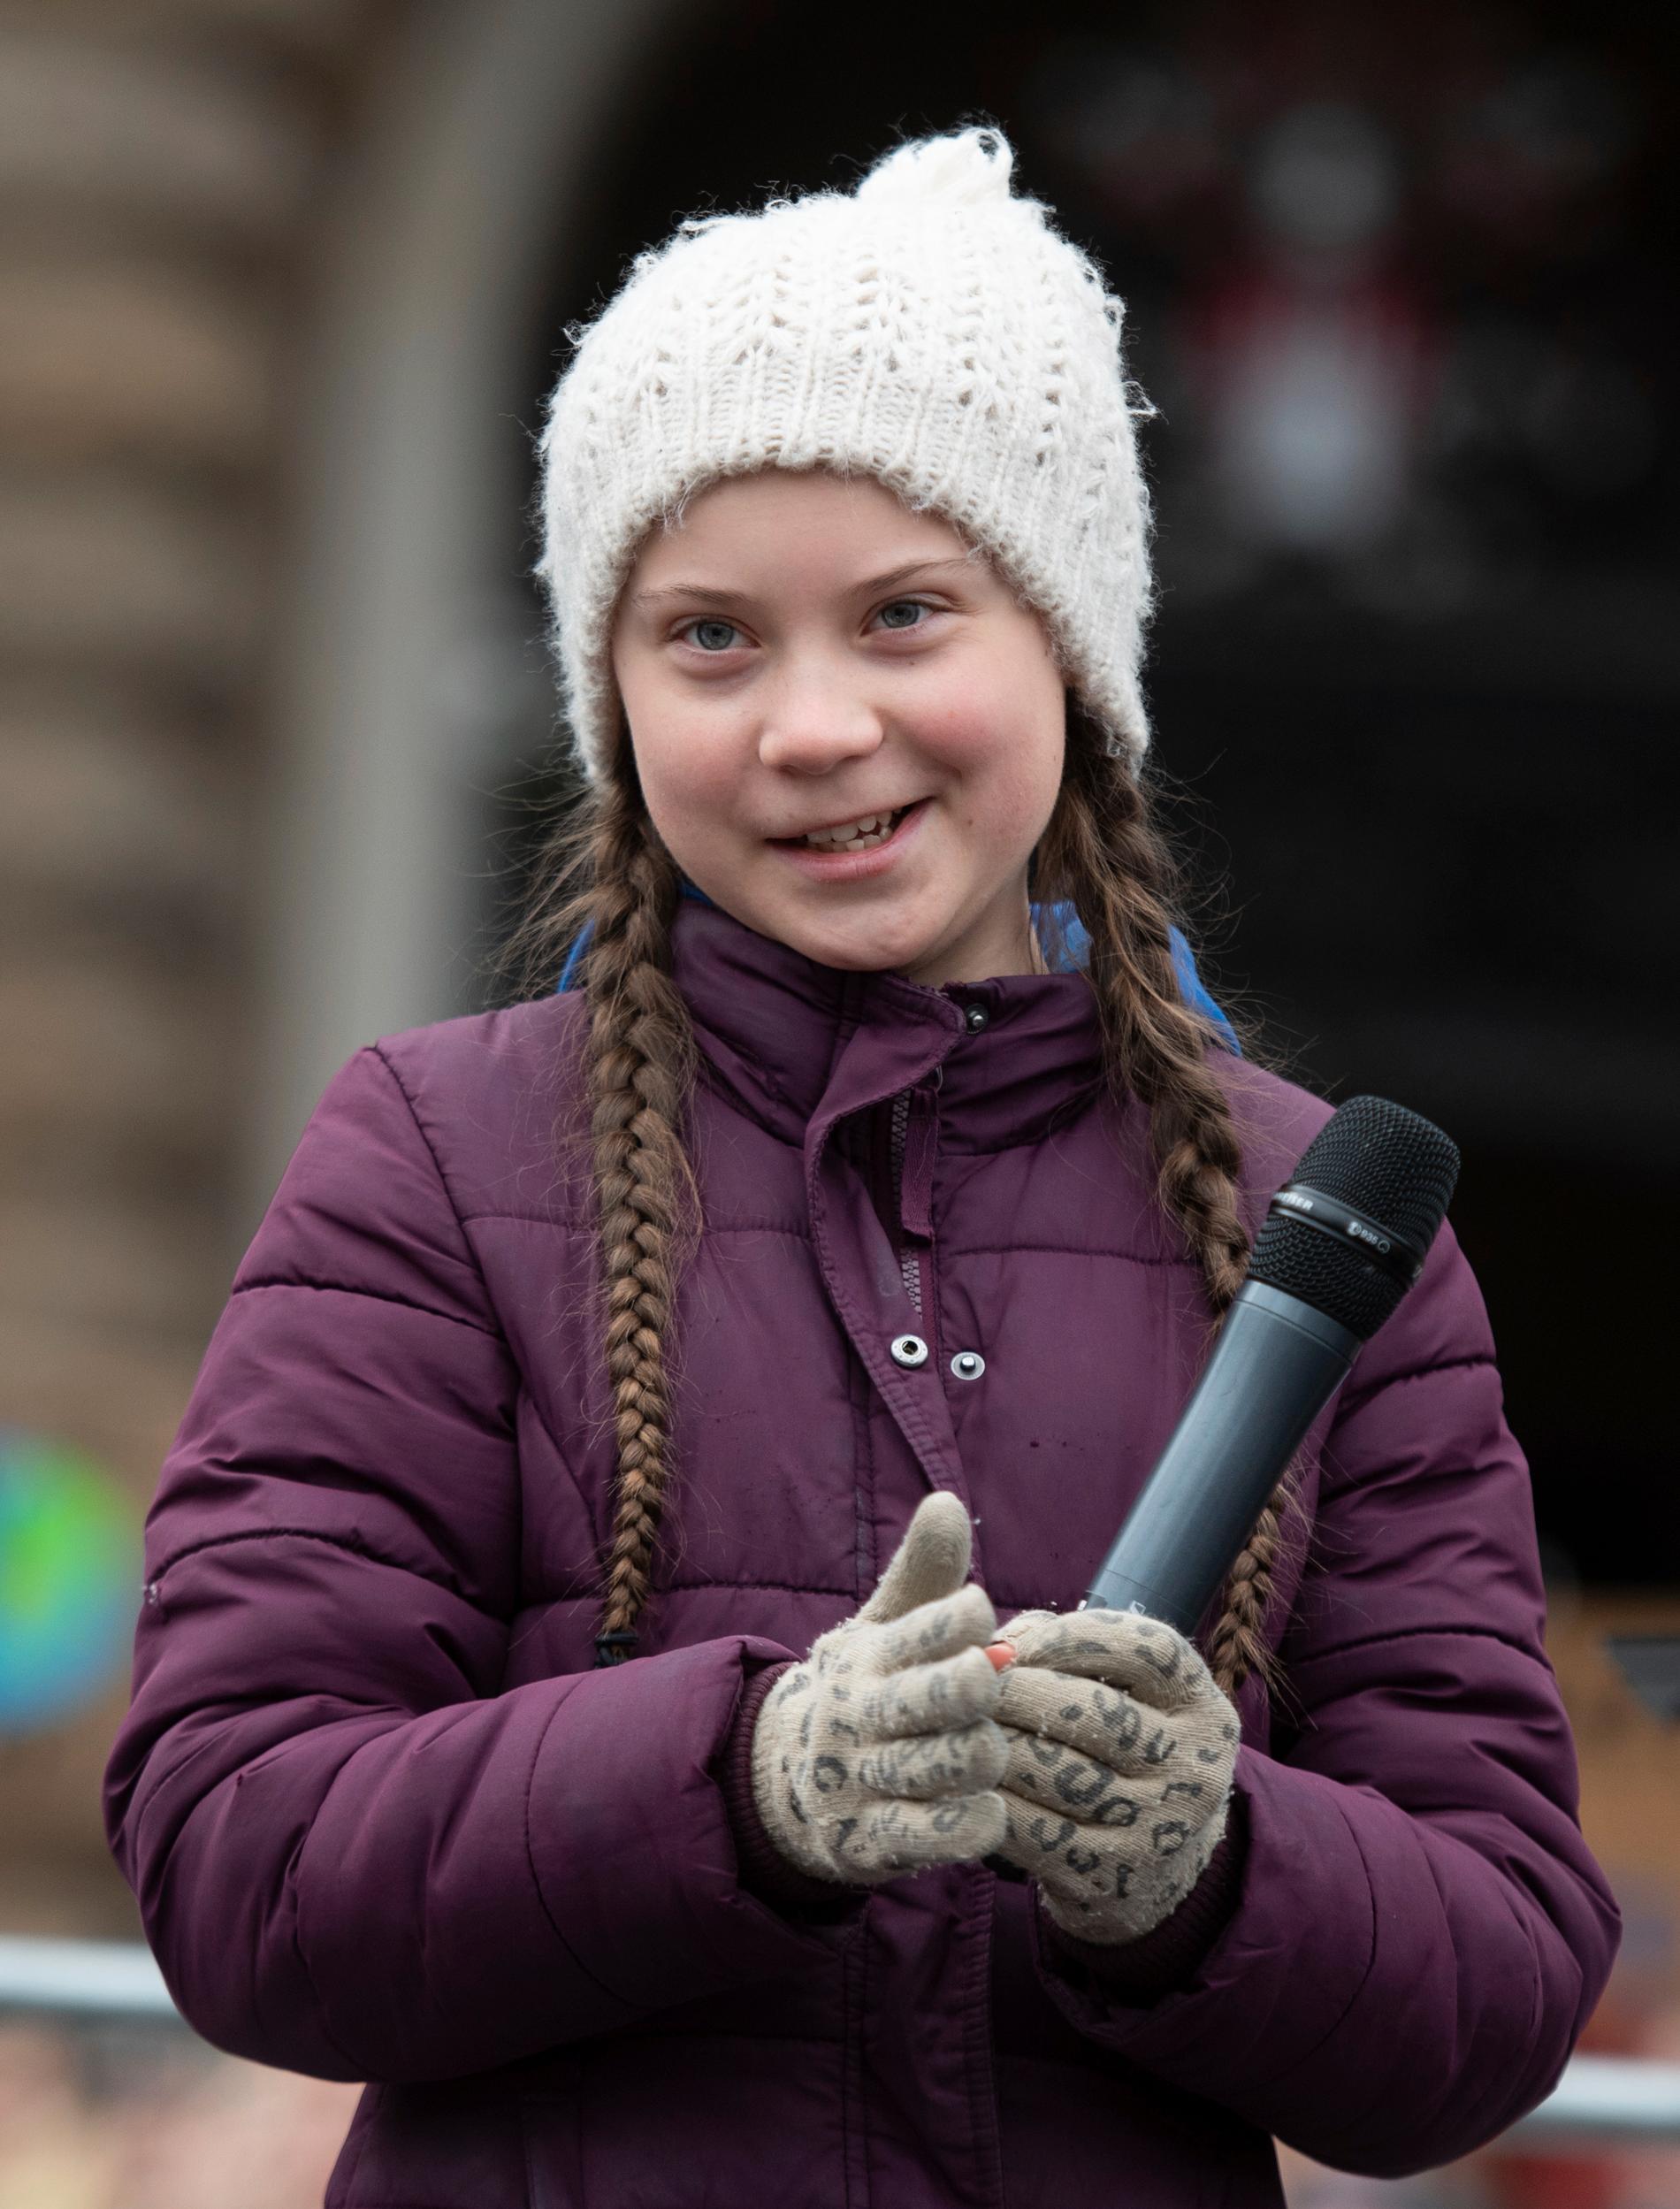 Klimataktivisten Greta Thunberg, 16. 